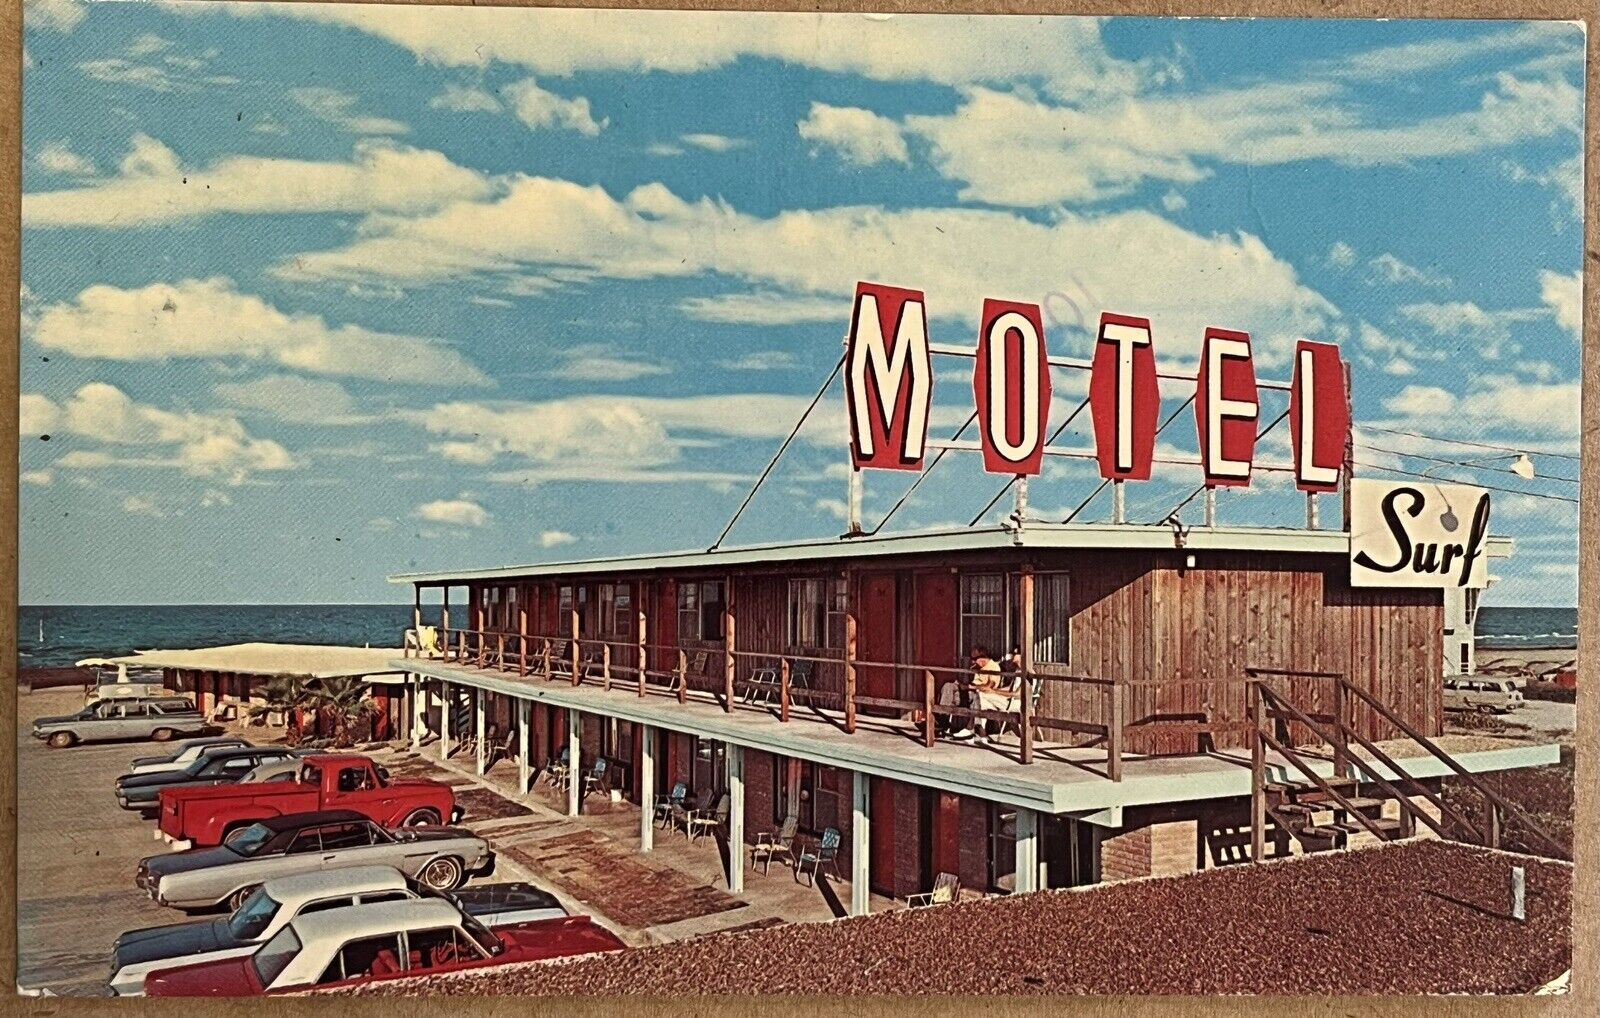 South Padre Island Texas Surf Motel Old Cars Truck People Vintage Postcard c1970